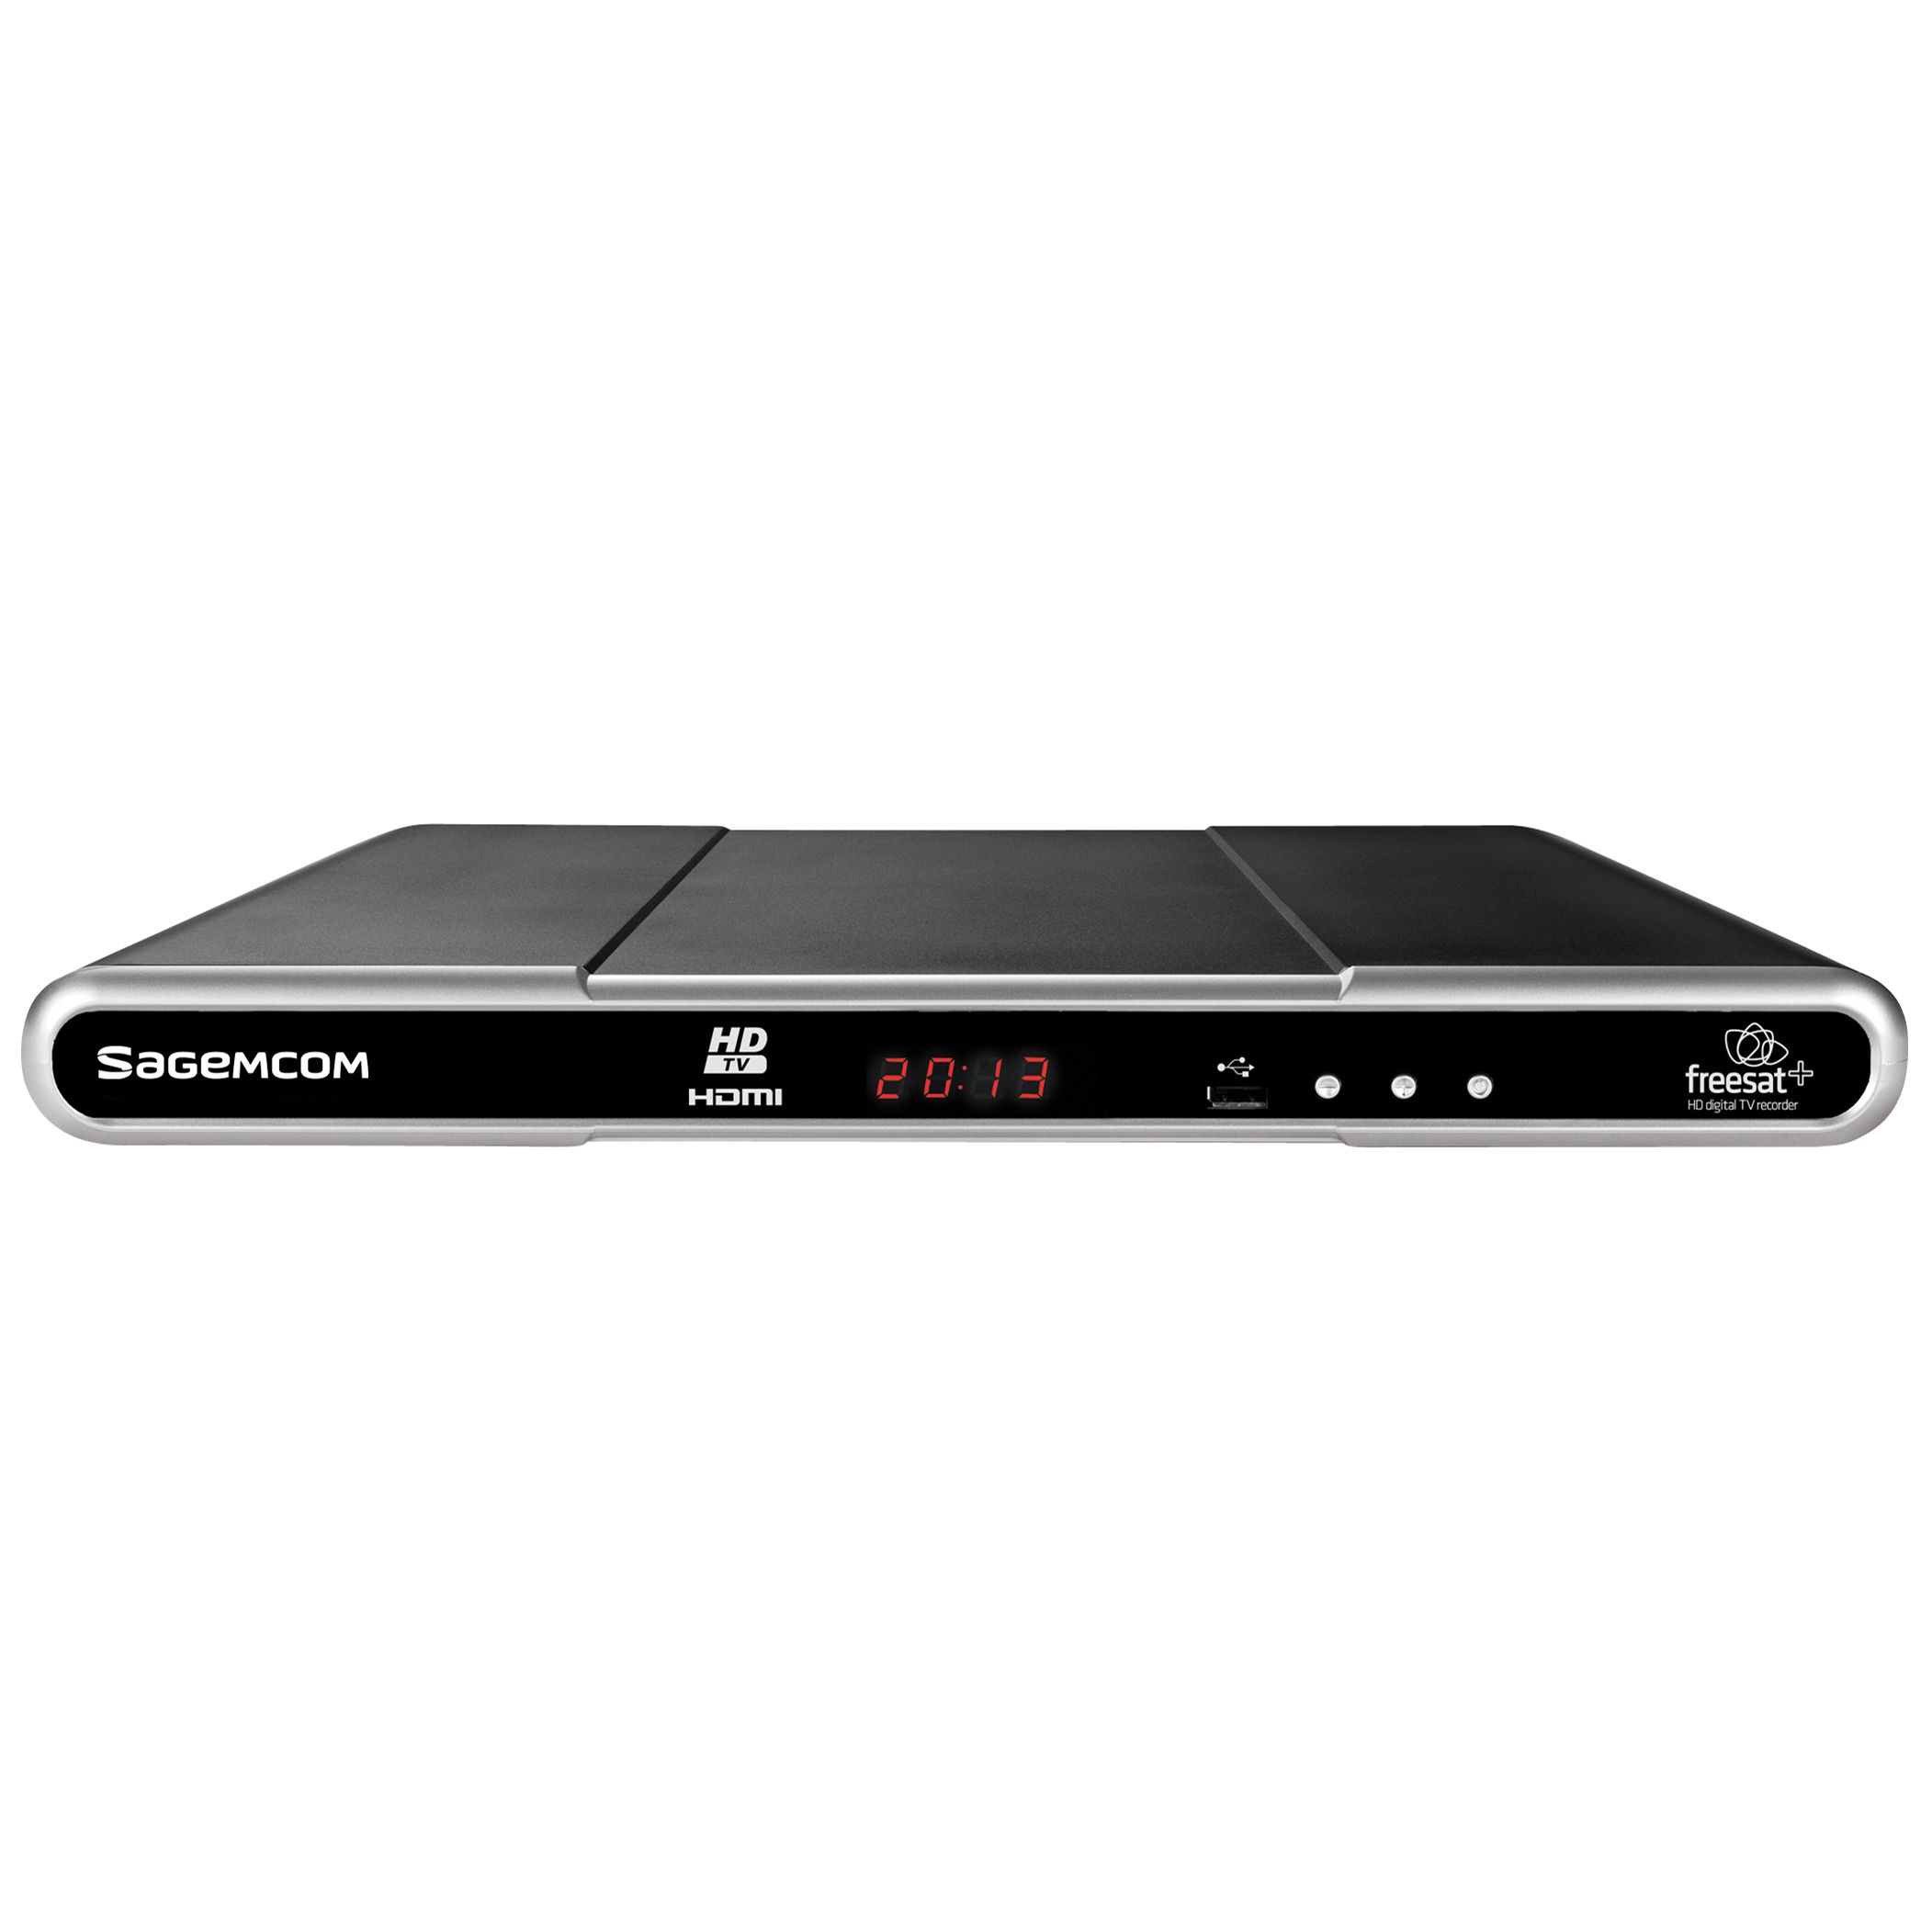 Sagemcom DTR94-500SHD 500GB freesat Digital TV Recorder at John Lewis